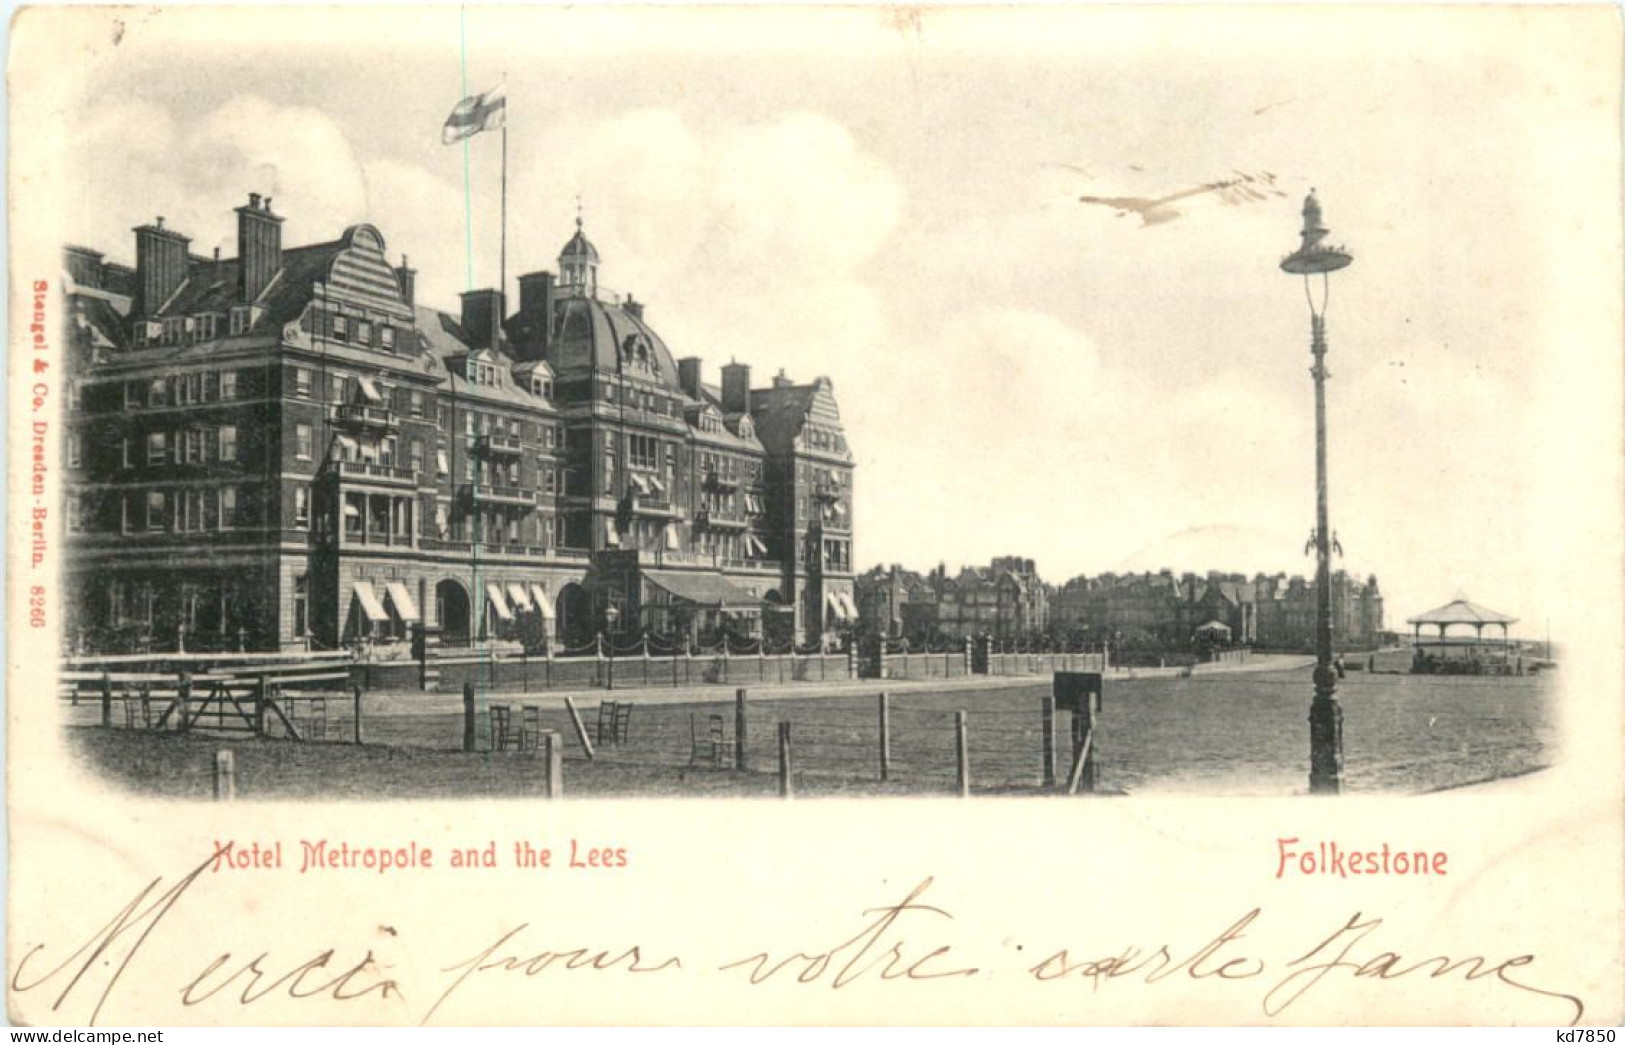 Folkestone - Hotel Metropole - Folkestone